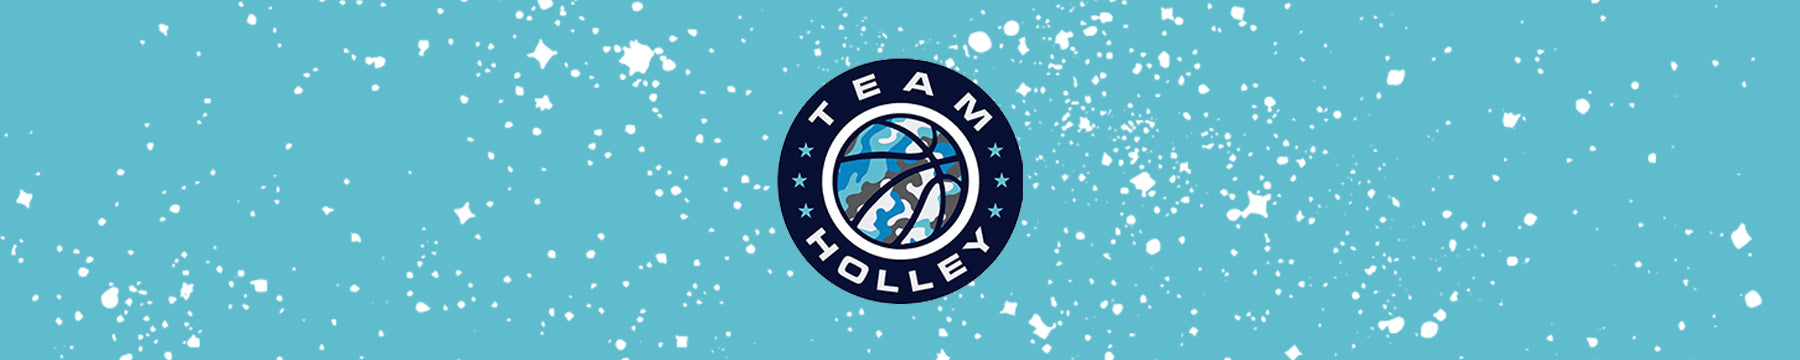 Team Holley Basketball